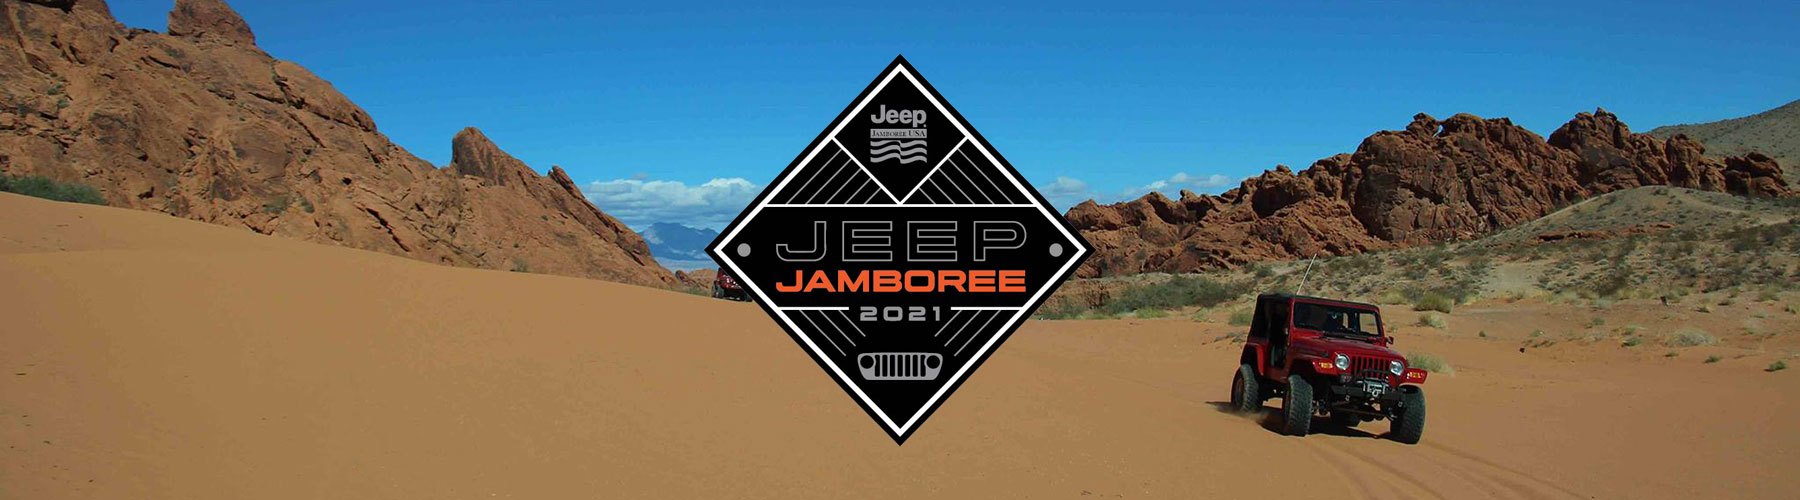 2021 Jeep Jamboree Event Schedule - Jeep Jamboree U.S.A.